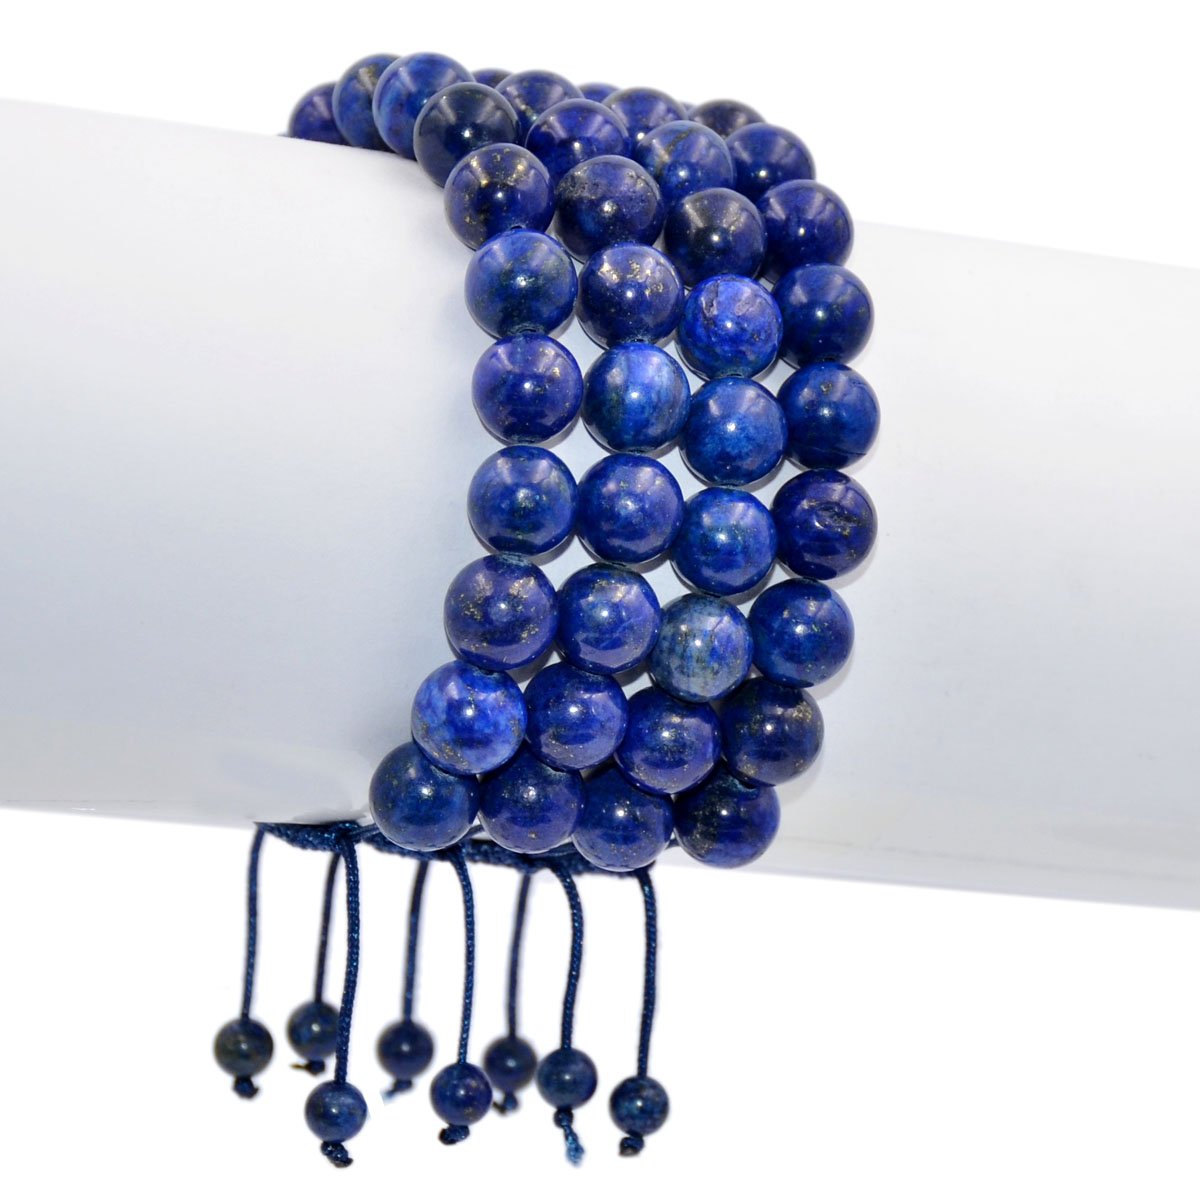 Lapis Lazuli Adjustable Bracelet